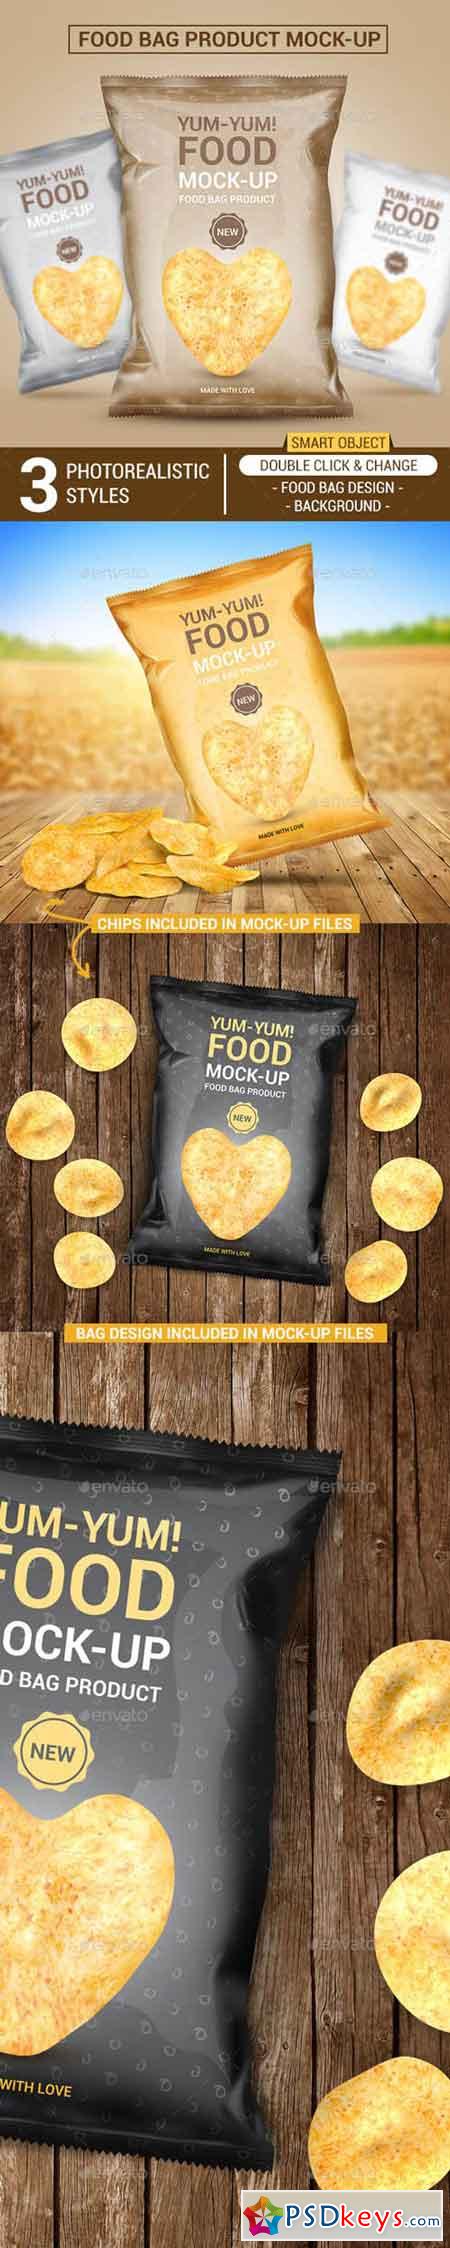 Food Bag Product Mock-Ups 14872294